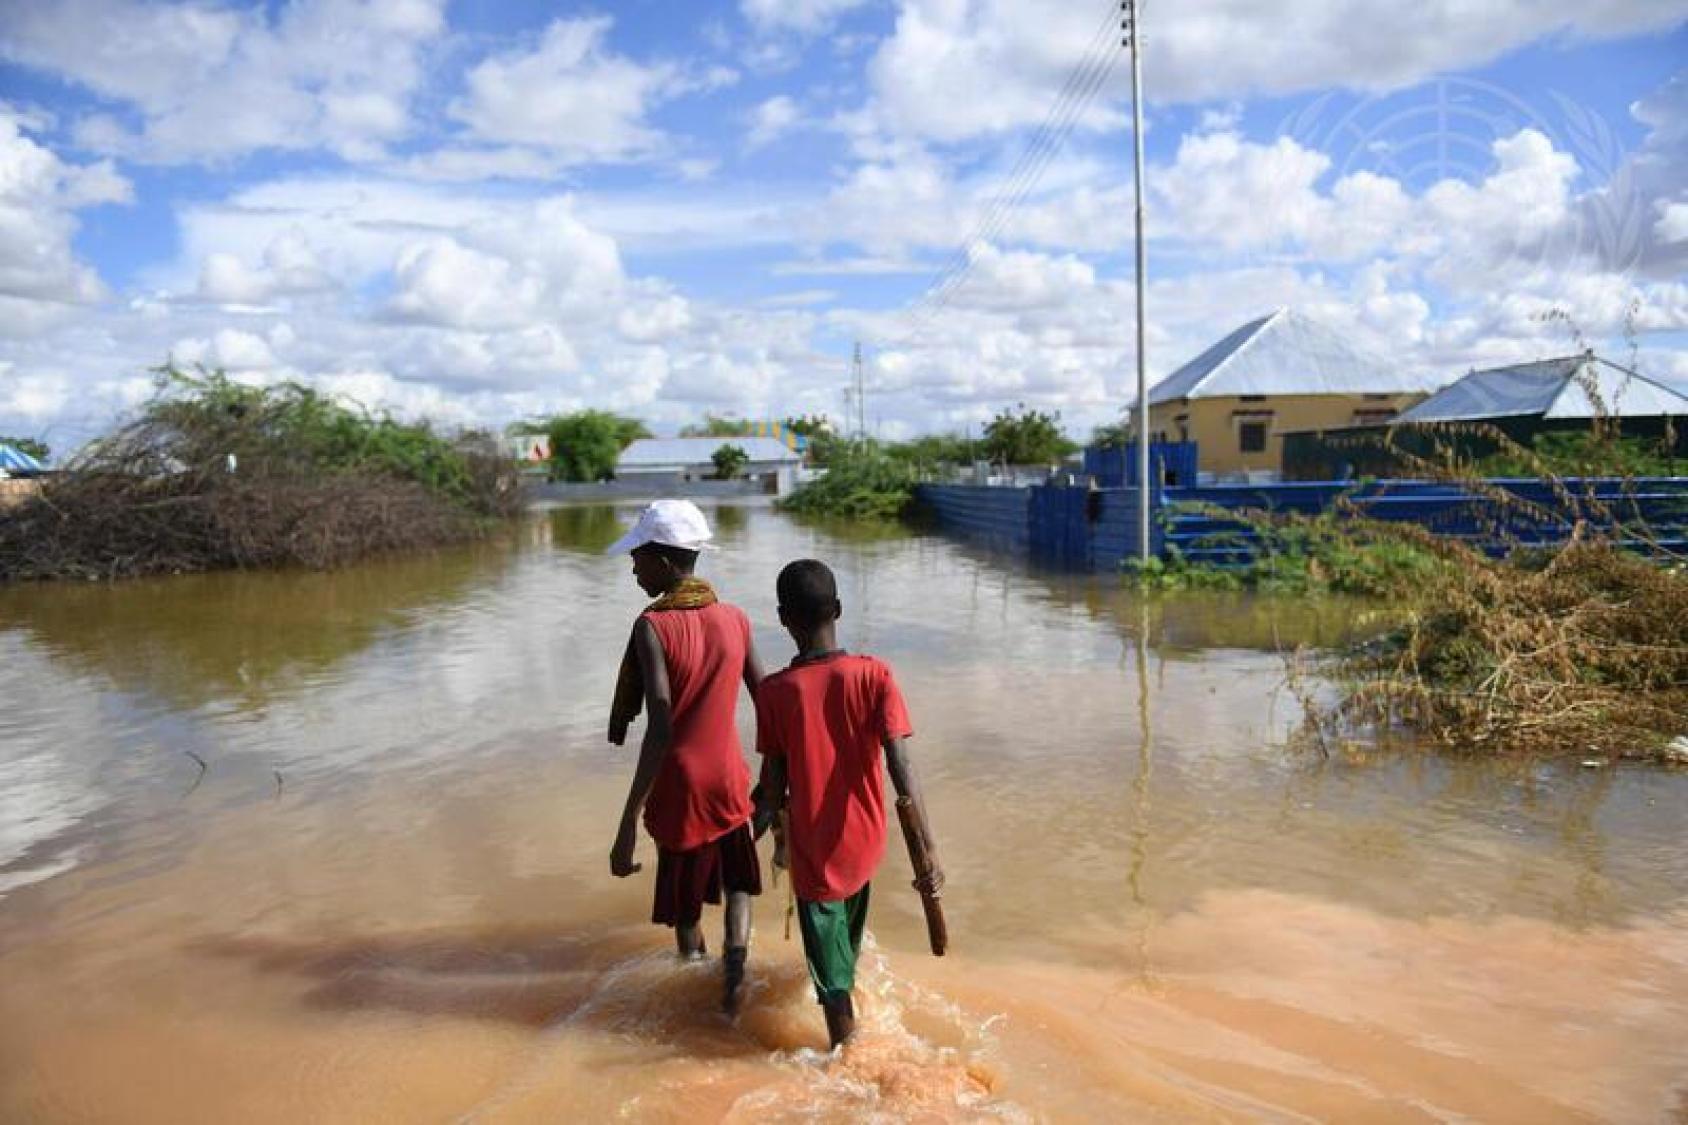 Two boys walk through a flooded area near homes.